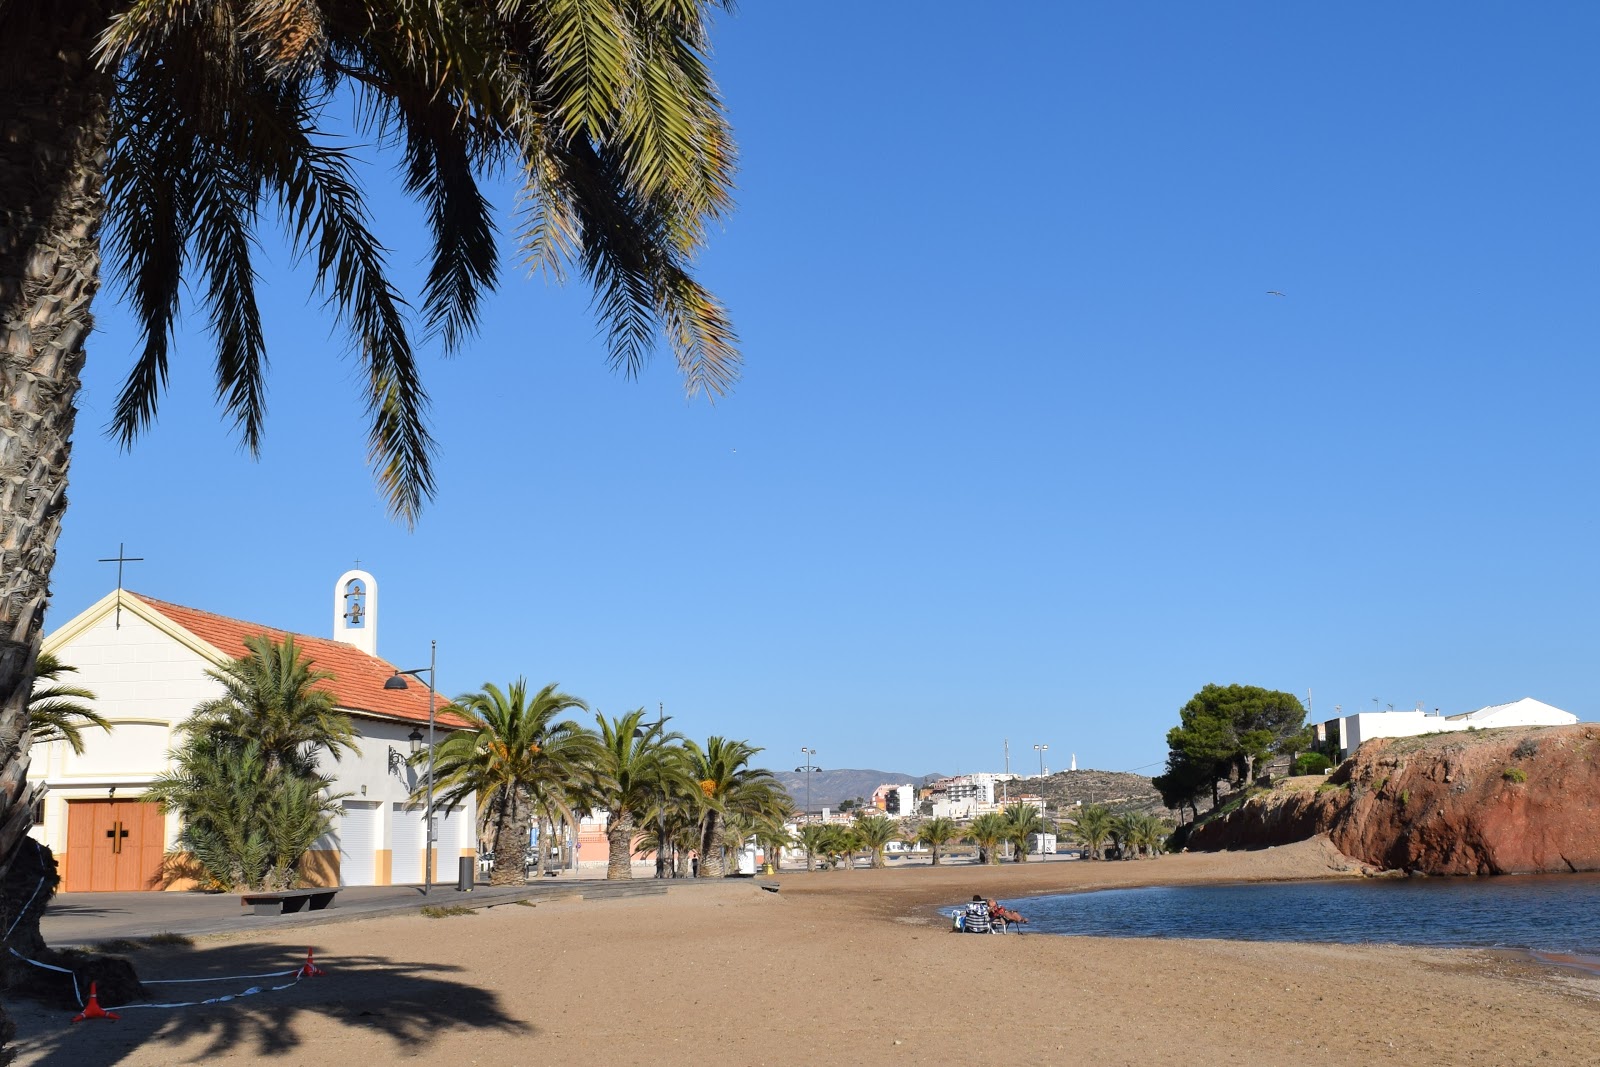 Foto af Playa de la Ermita faciliteter område